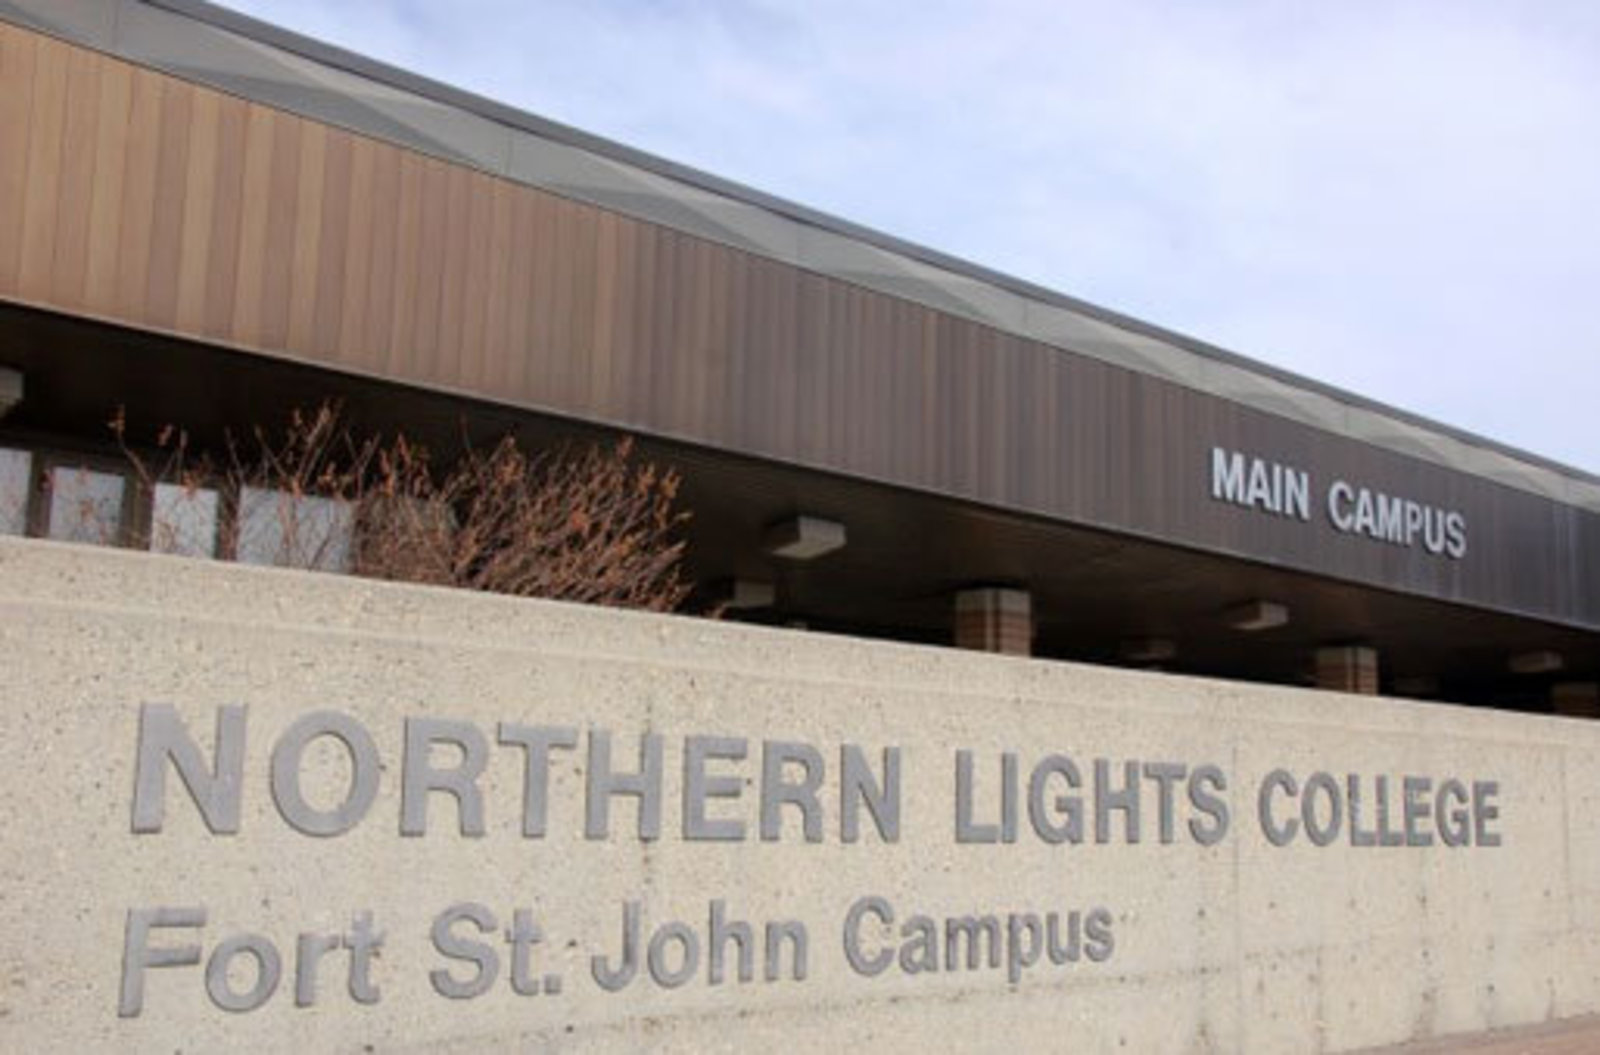 Photo Northern Lights College Fort St.John Campus